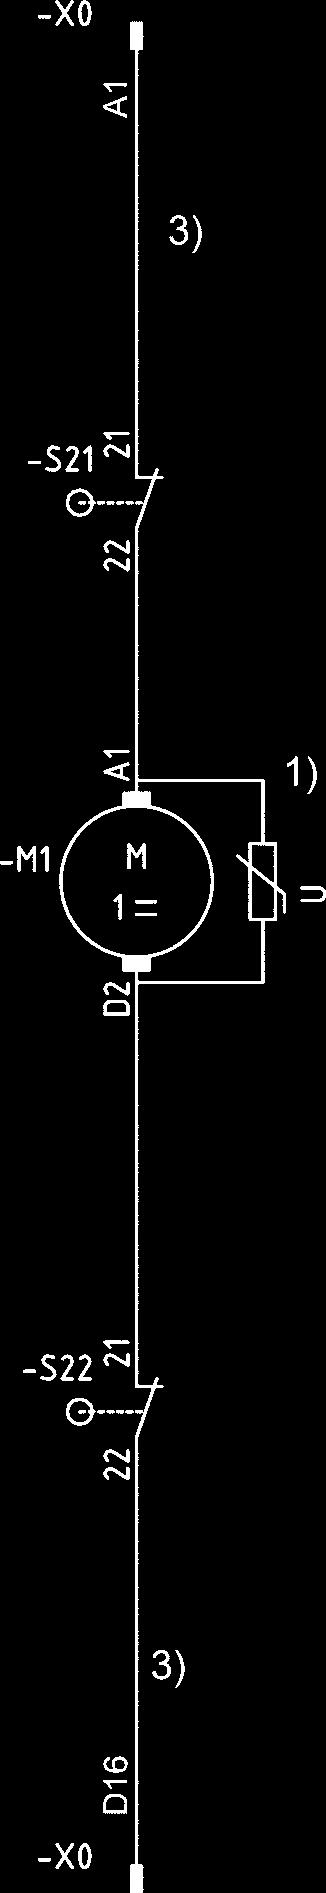 Description a) b) c) d) 1) Integrated varistor 2) Integrated rectifier for